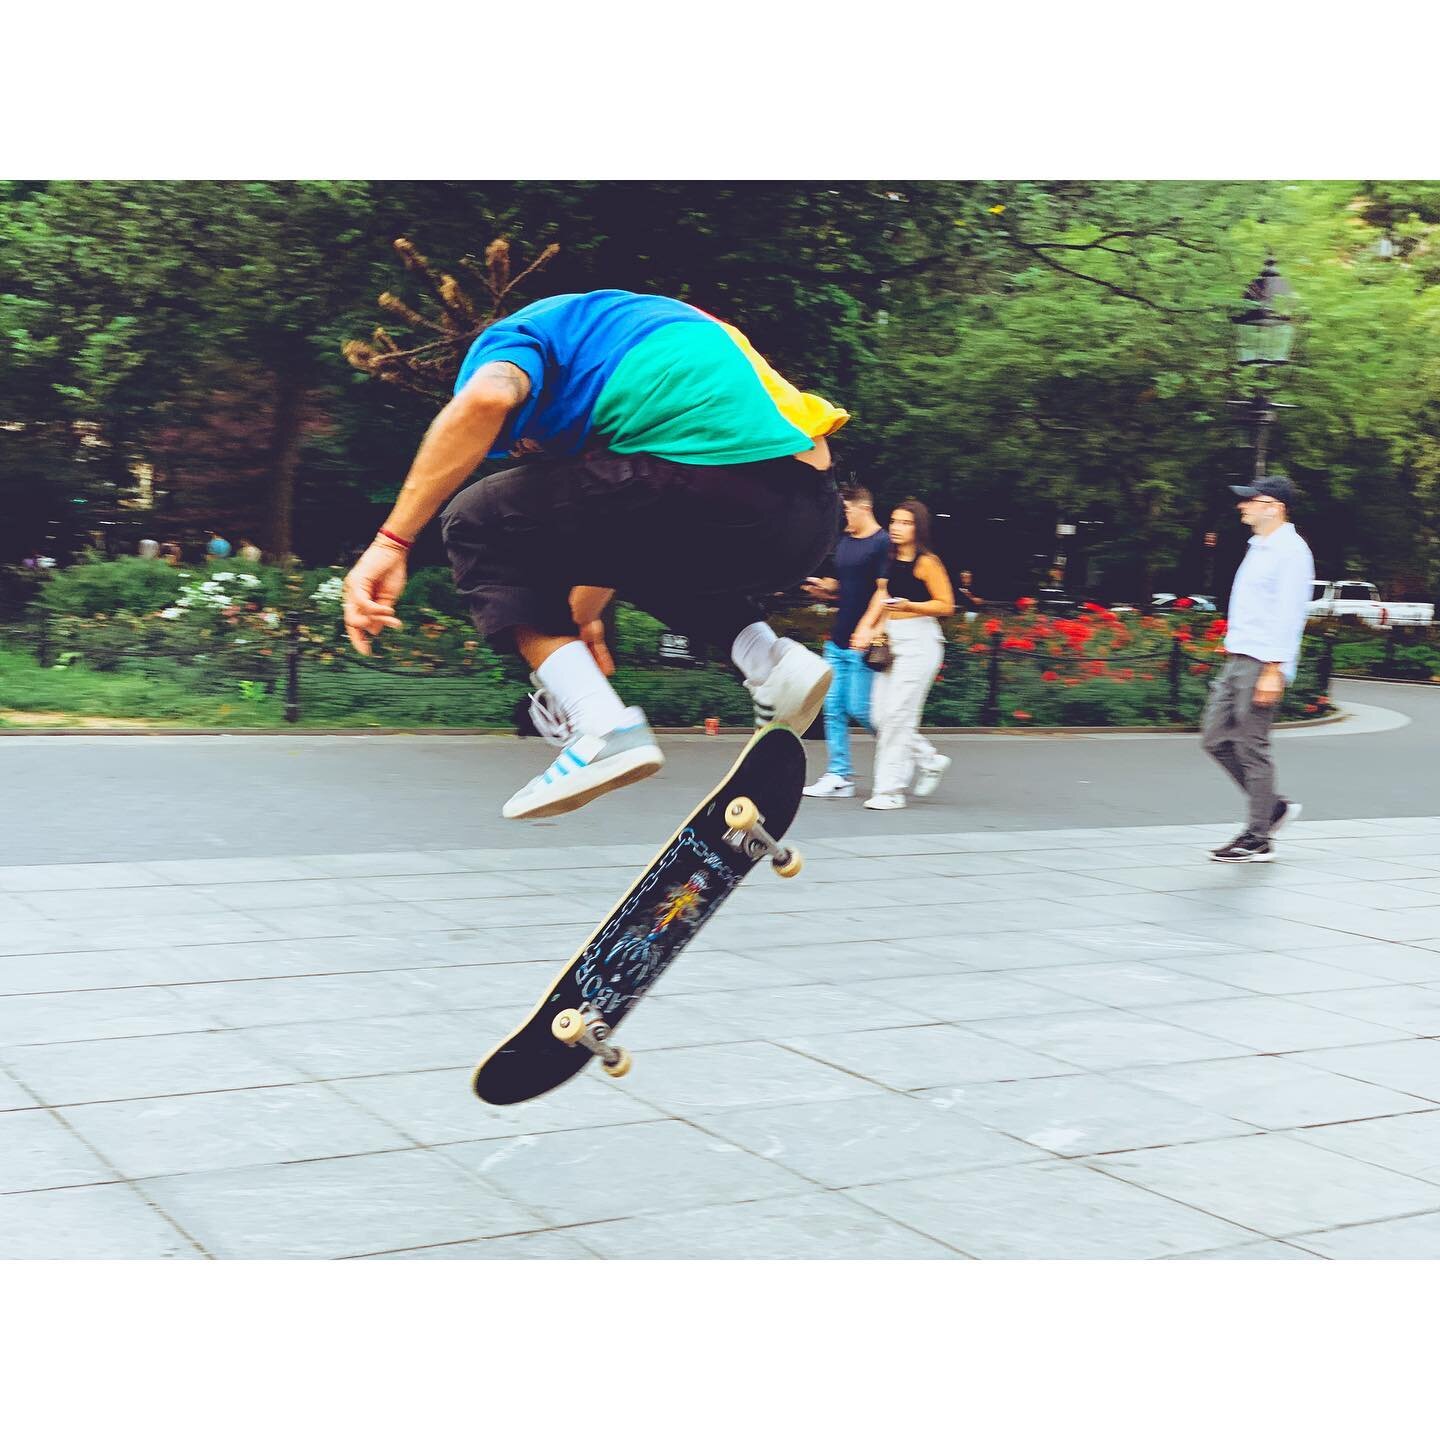 Landing tricks. #washingtonsquarepark #skateboardtricks #nyc